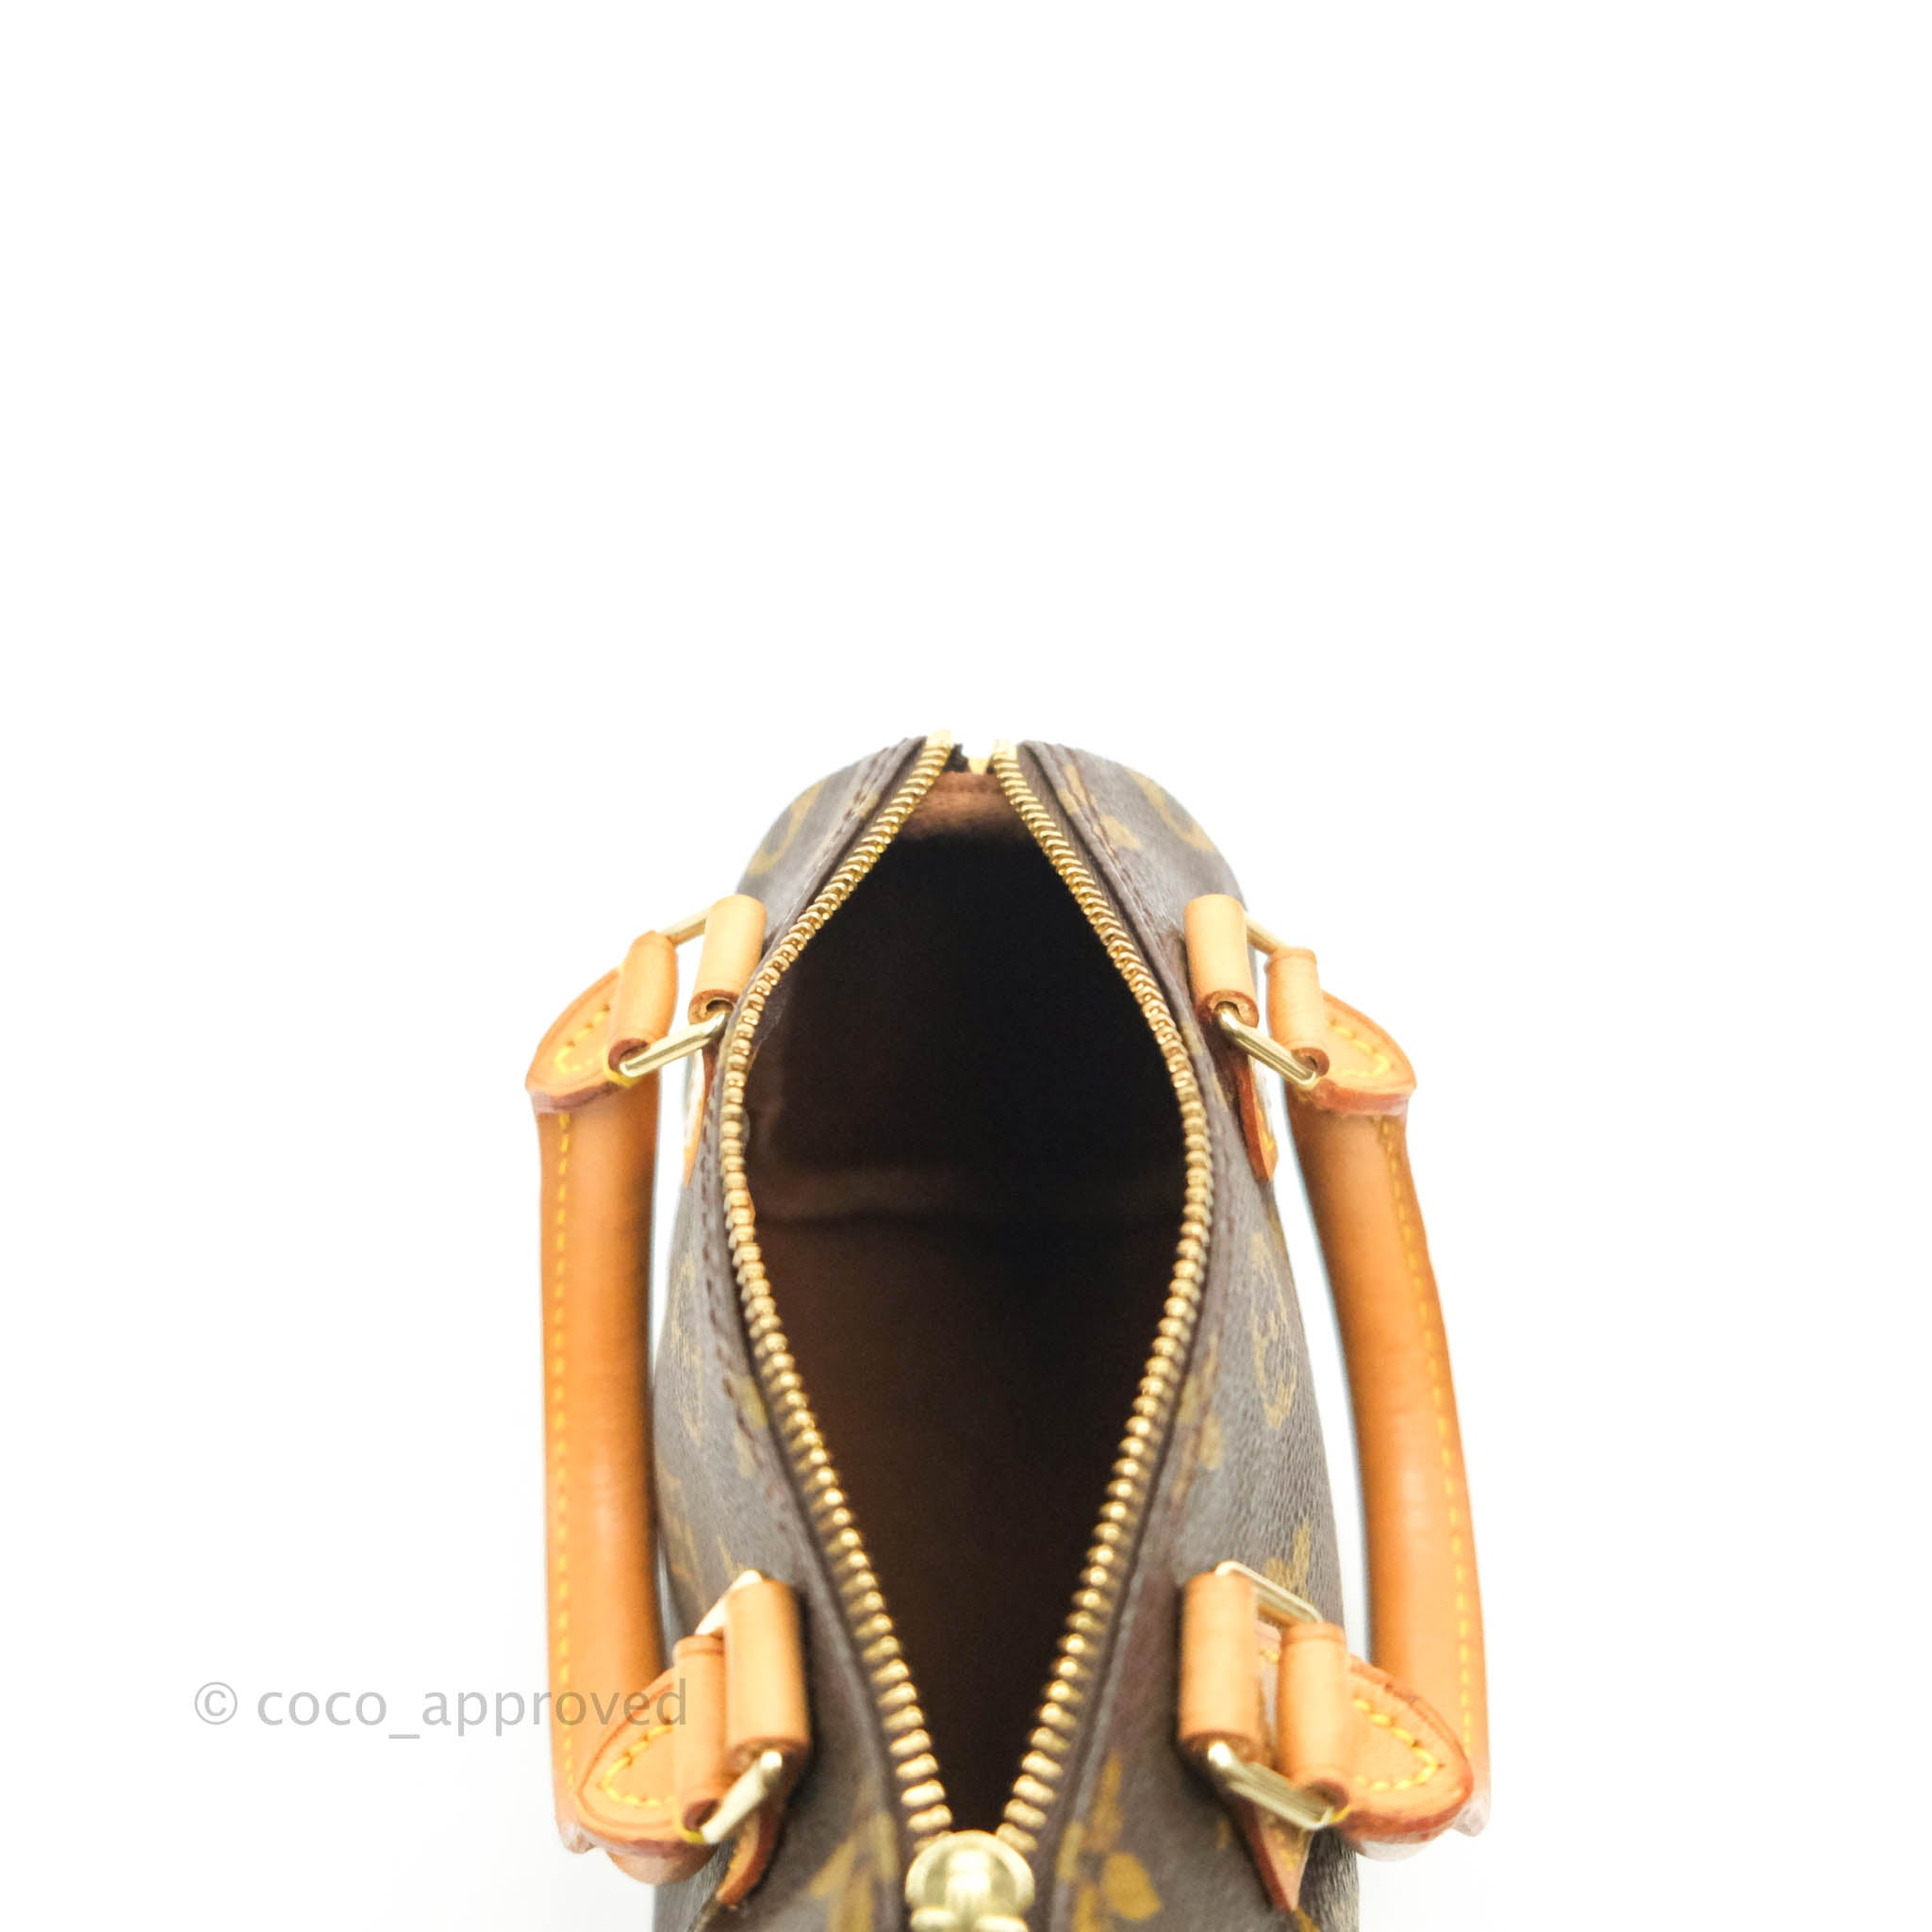 Louis Vuitton Speedy Nano Monogram M41534 - Tabita Bags – Tabita